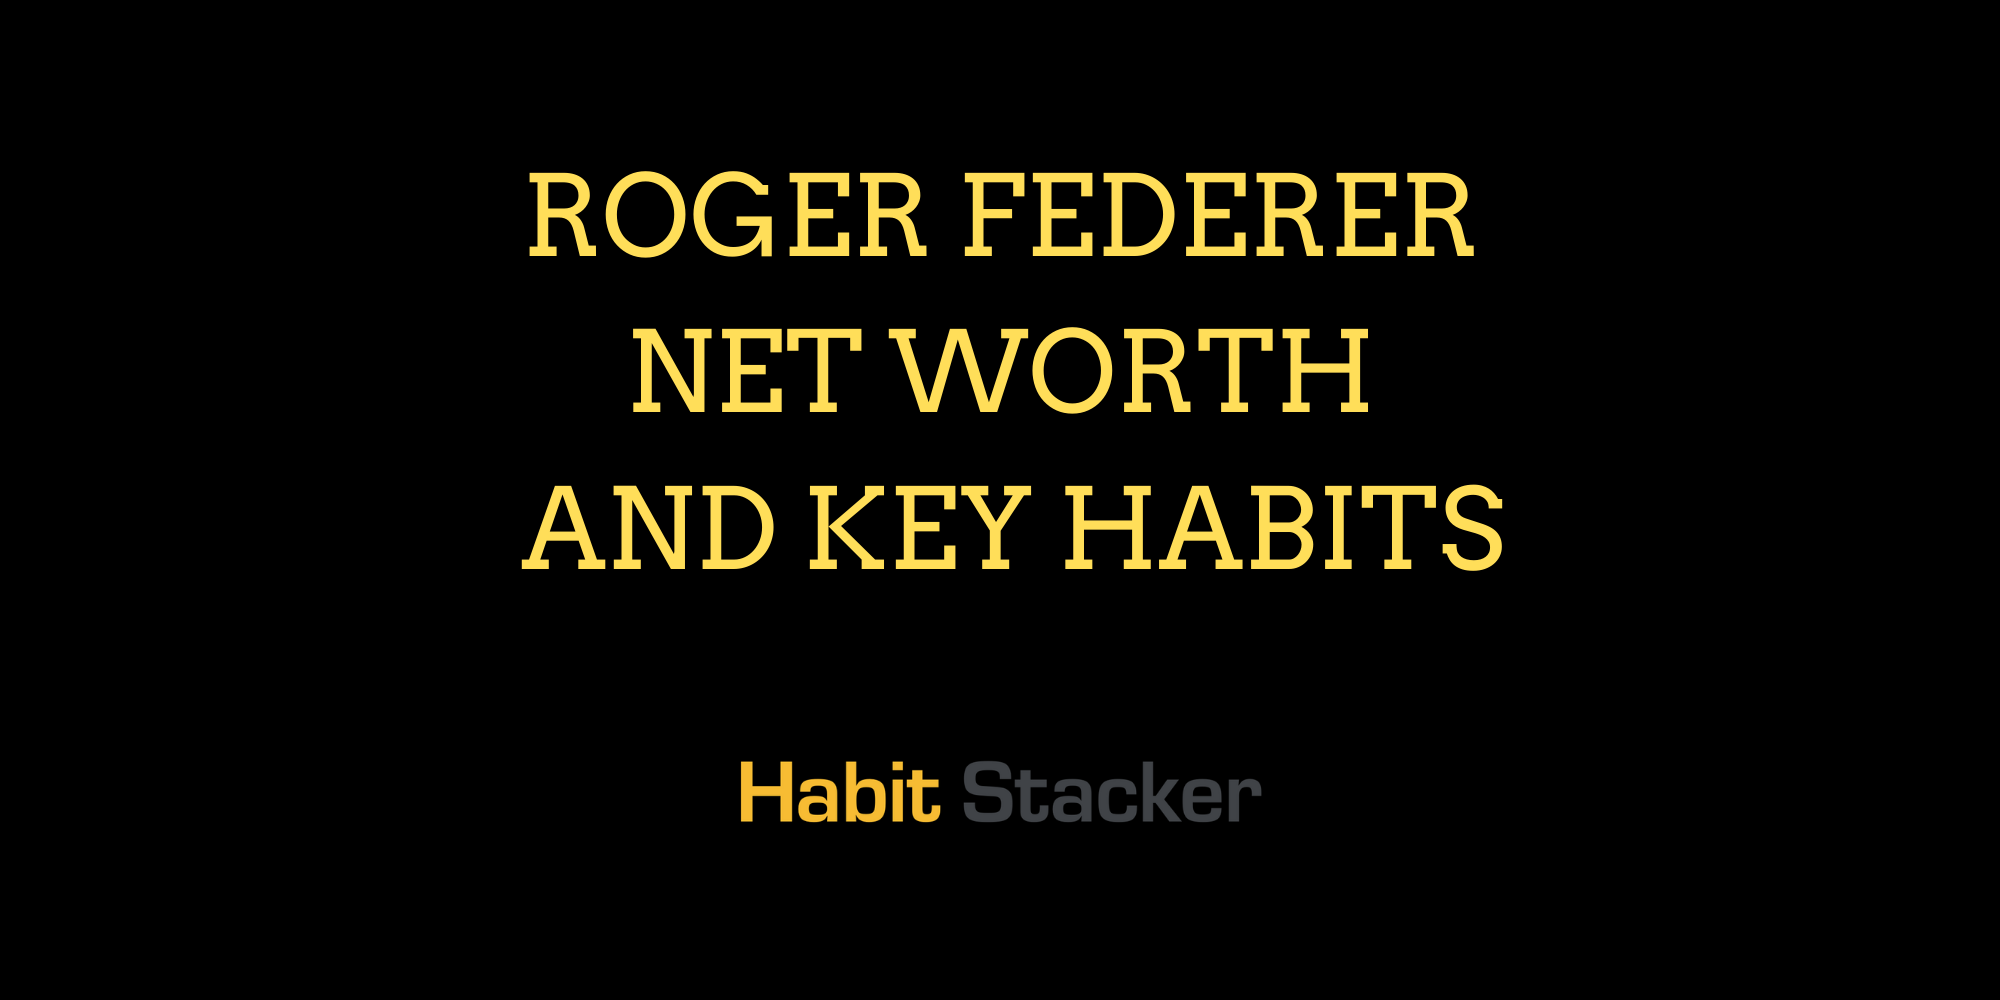 Roger Federer Net Worth and Key Habits